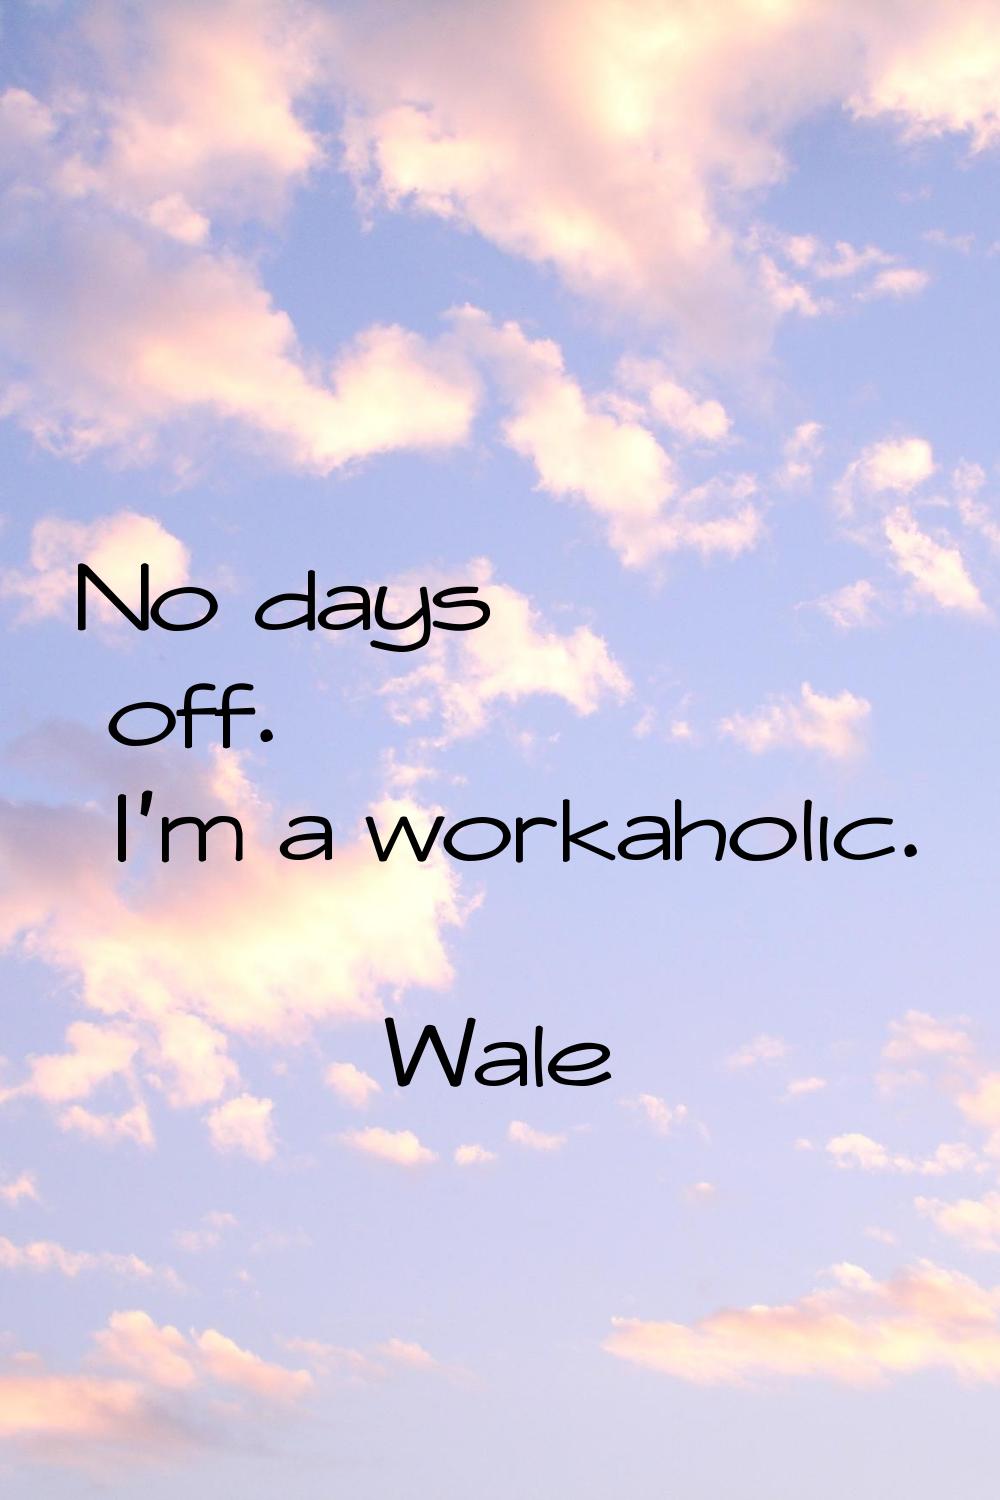 No days off. I'm a workaholic.